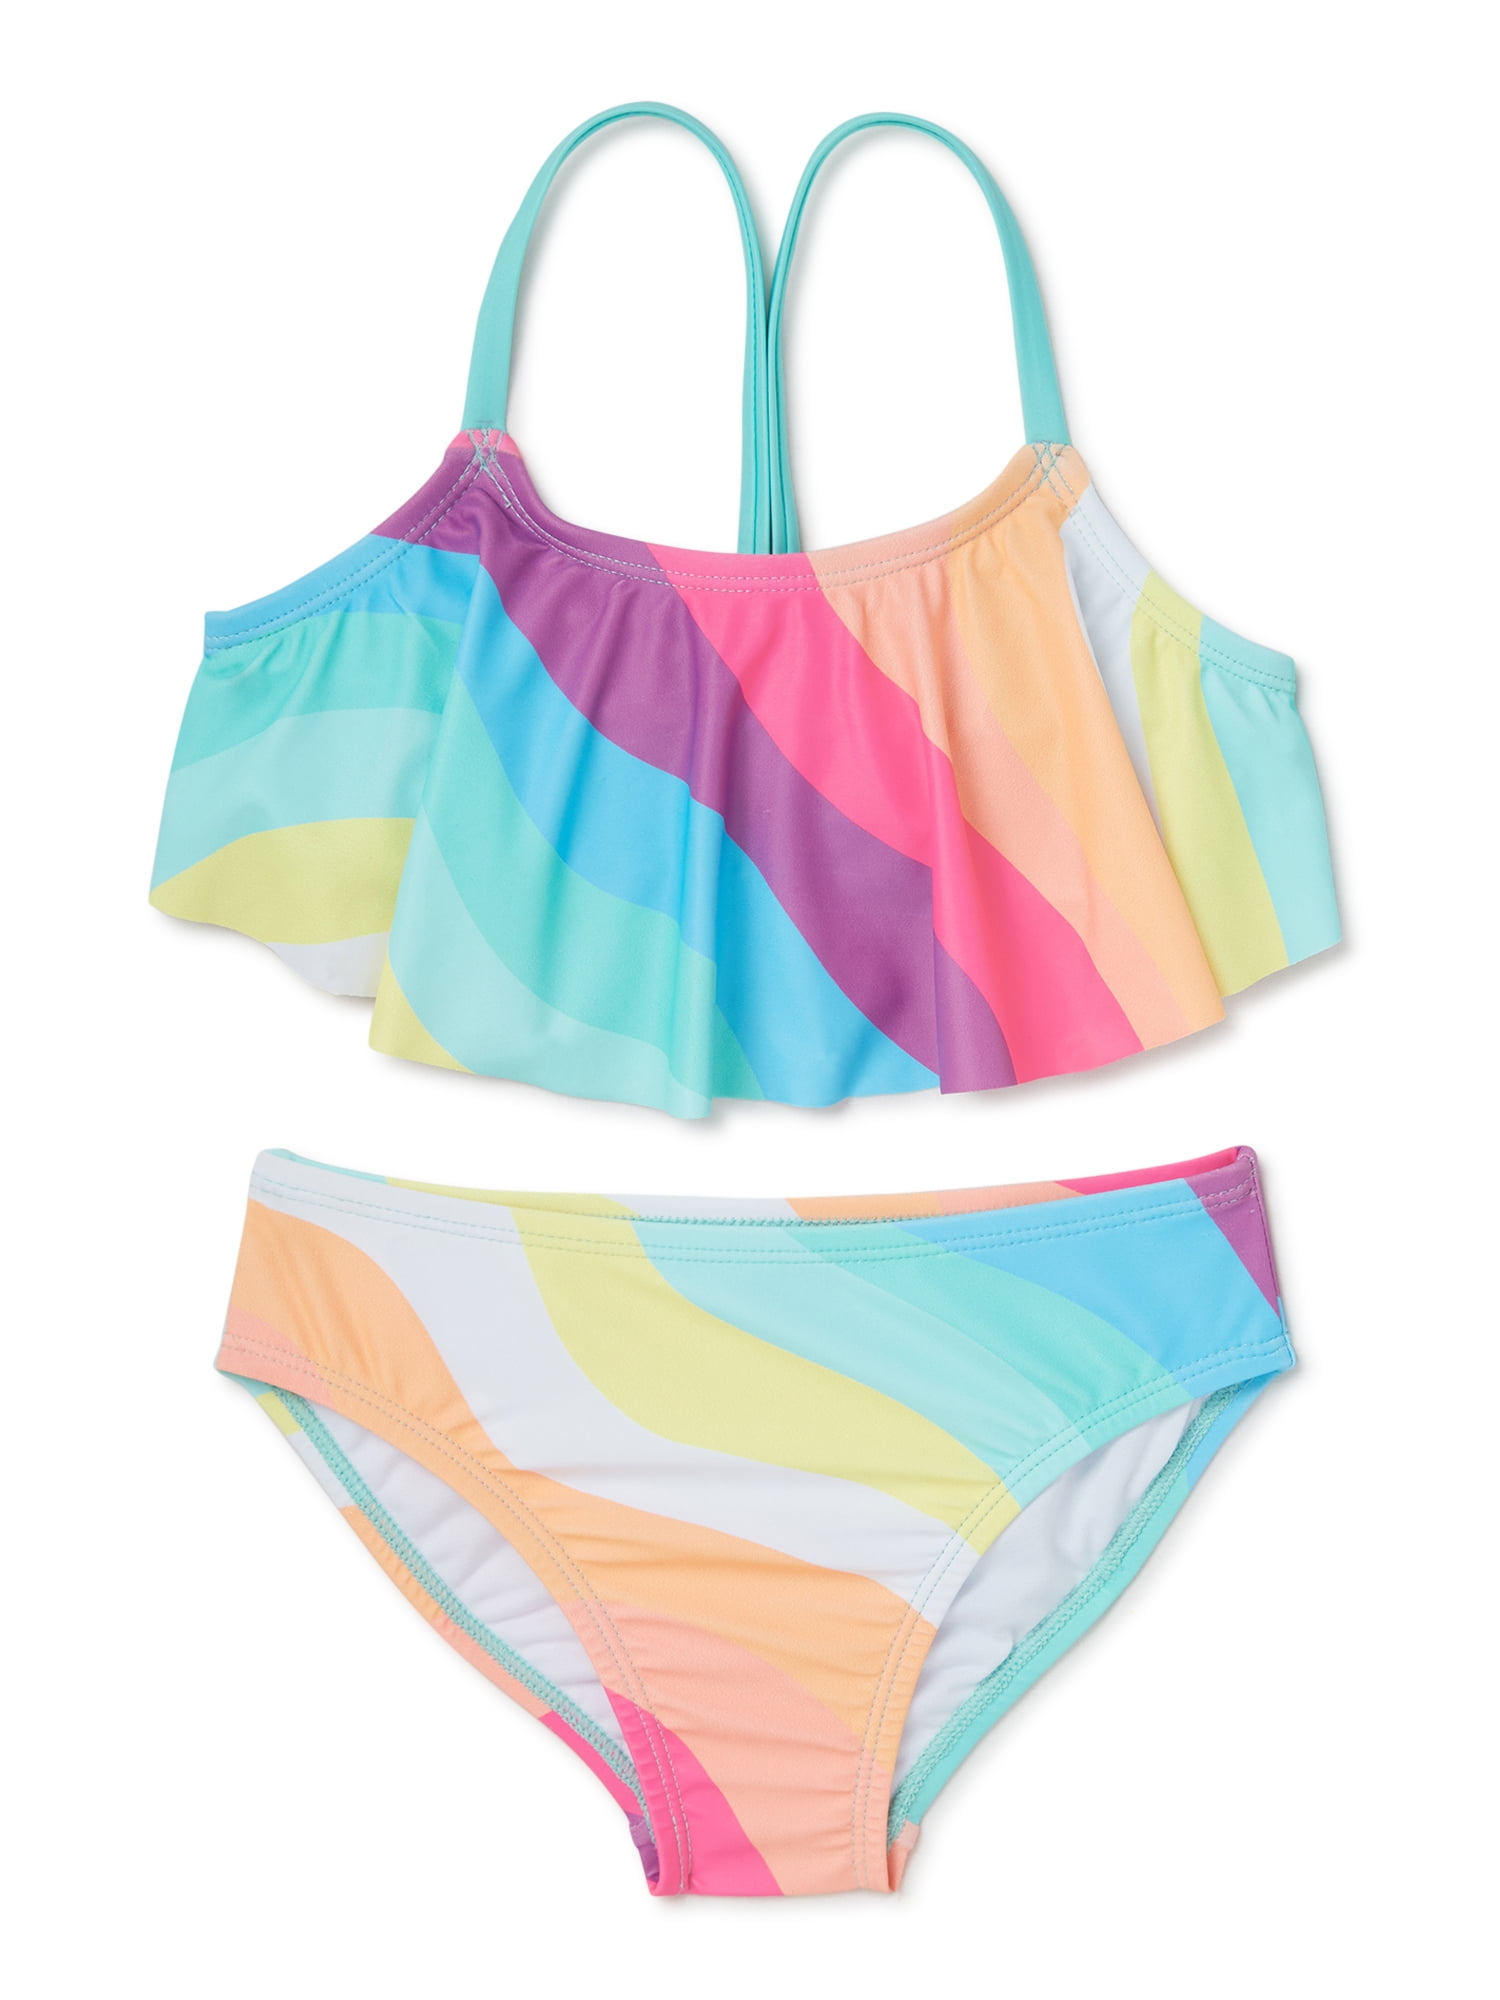 KunLunMen Girls Two Piece Swimsuits Summer Beach Ruffle Bikini Sets 3-10 Years 